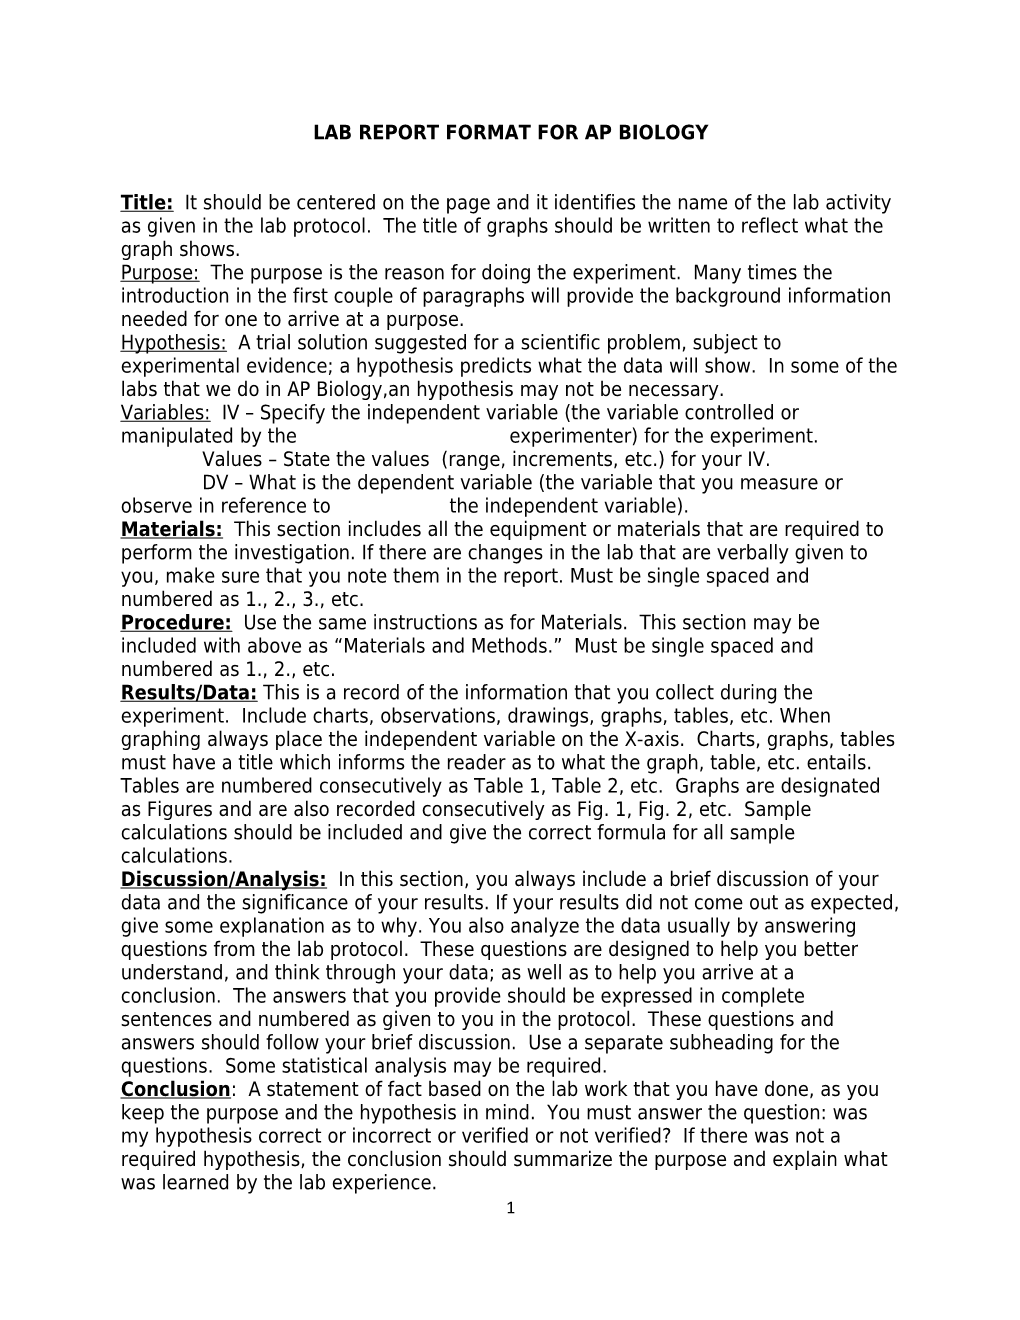 Lab Report Format for Ap Biology